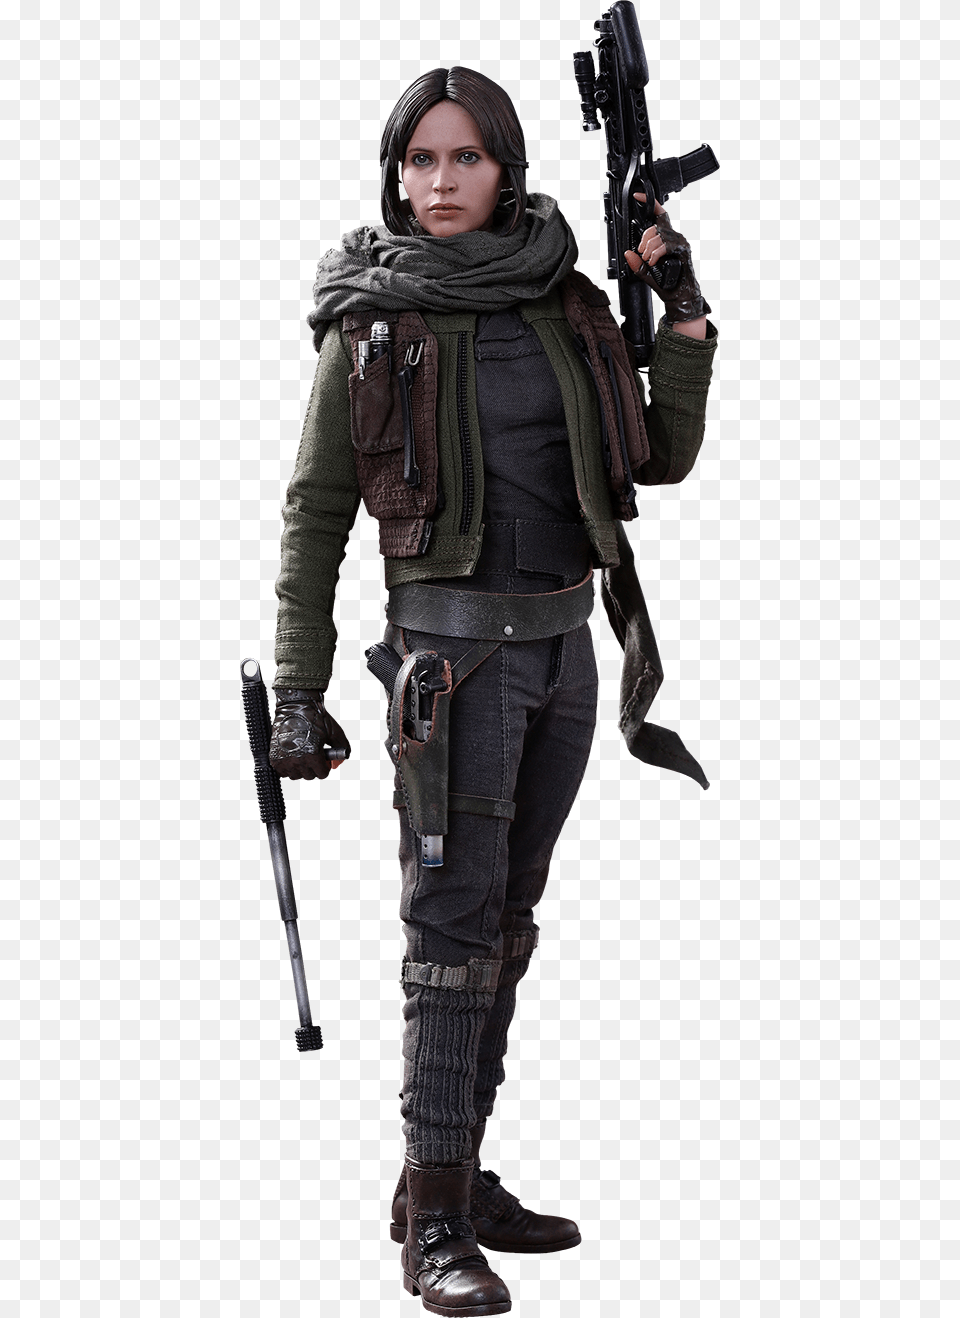 Doom 2016 Possessed Soldier, Weapon, Firearm, Handgun, Gun Png